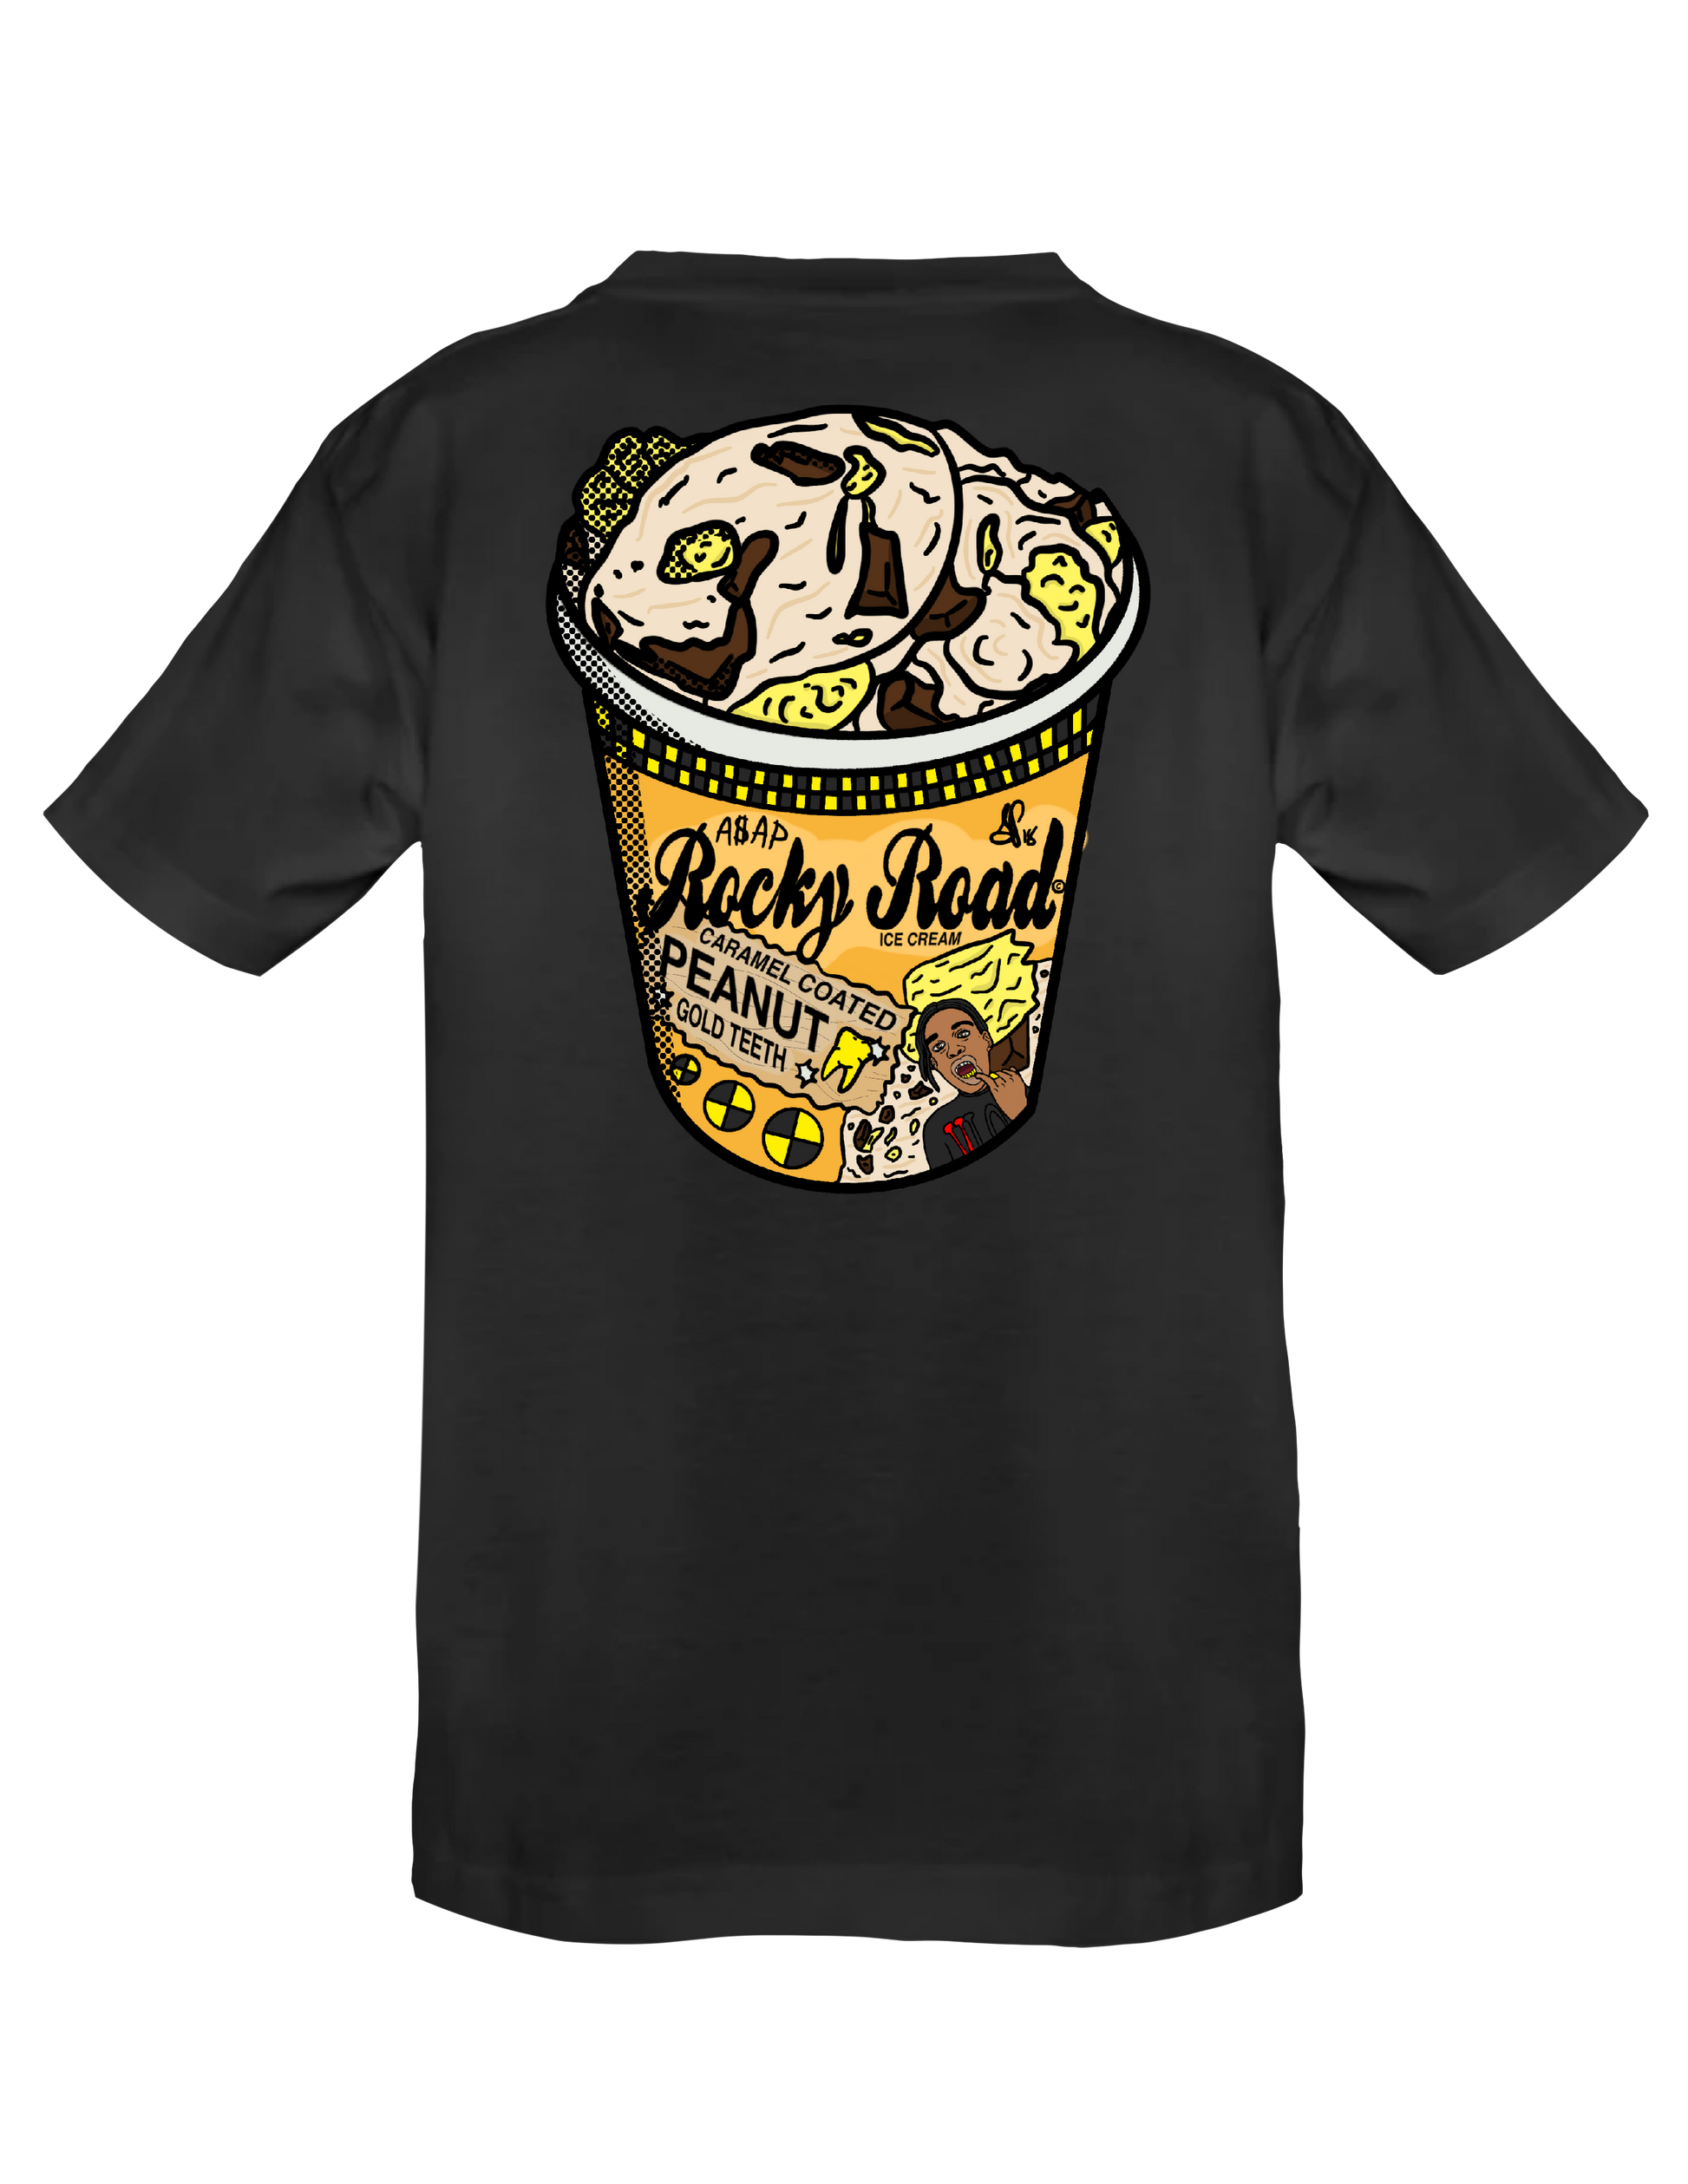 ASAP ROCKY ROAD ICE CREAM - T-Shirt by BOYSDONTDRAW